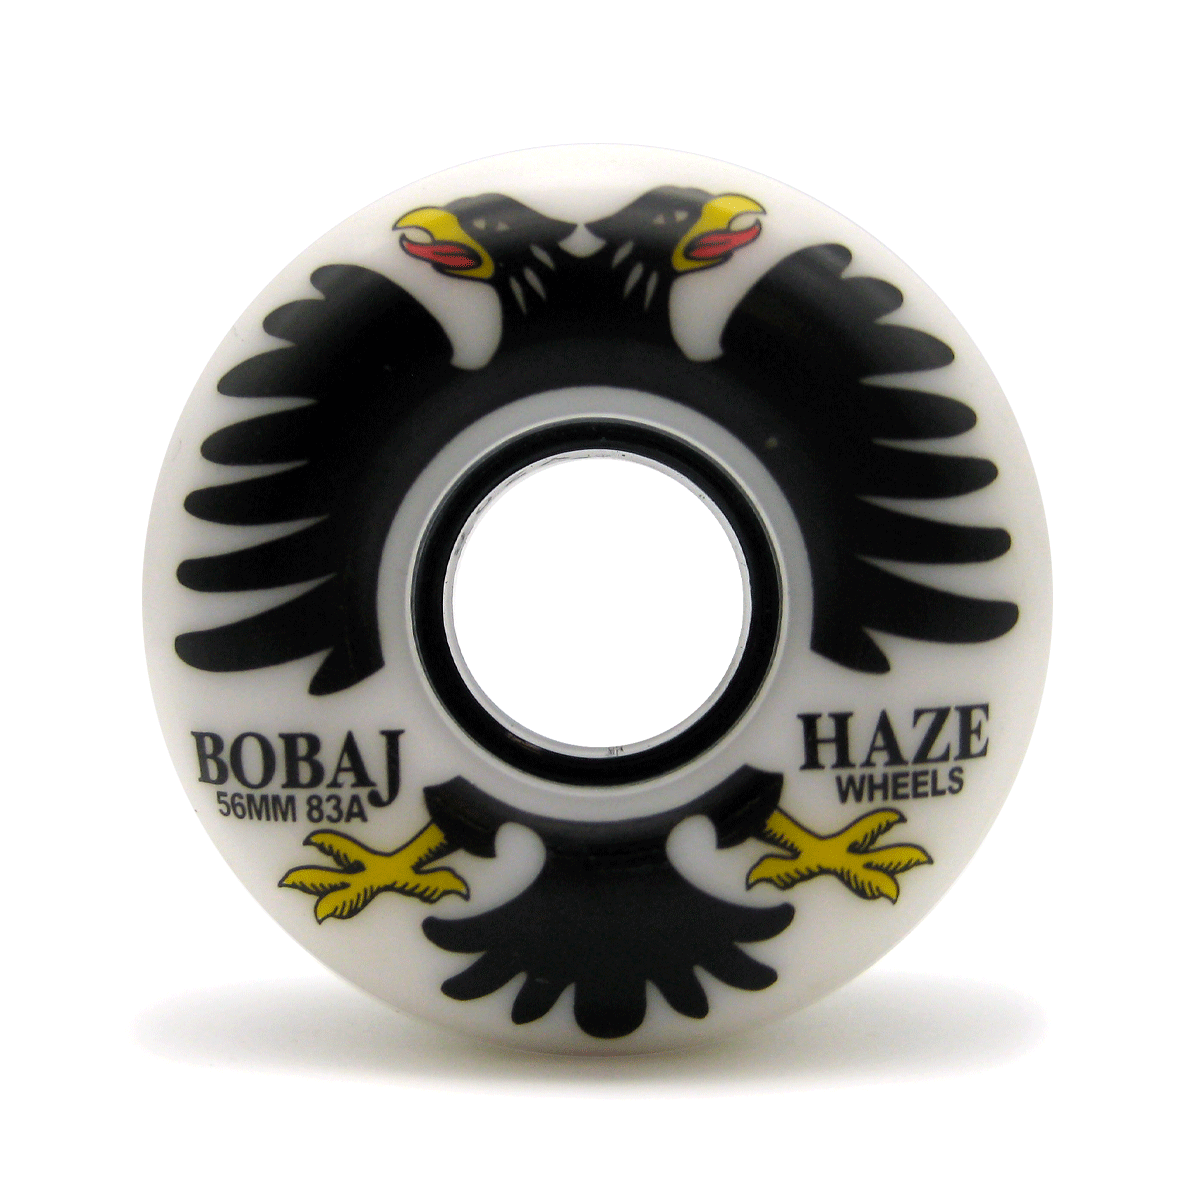 Haze wheels Bobaj Filmer Model 56mm 83a